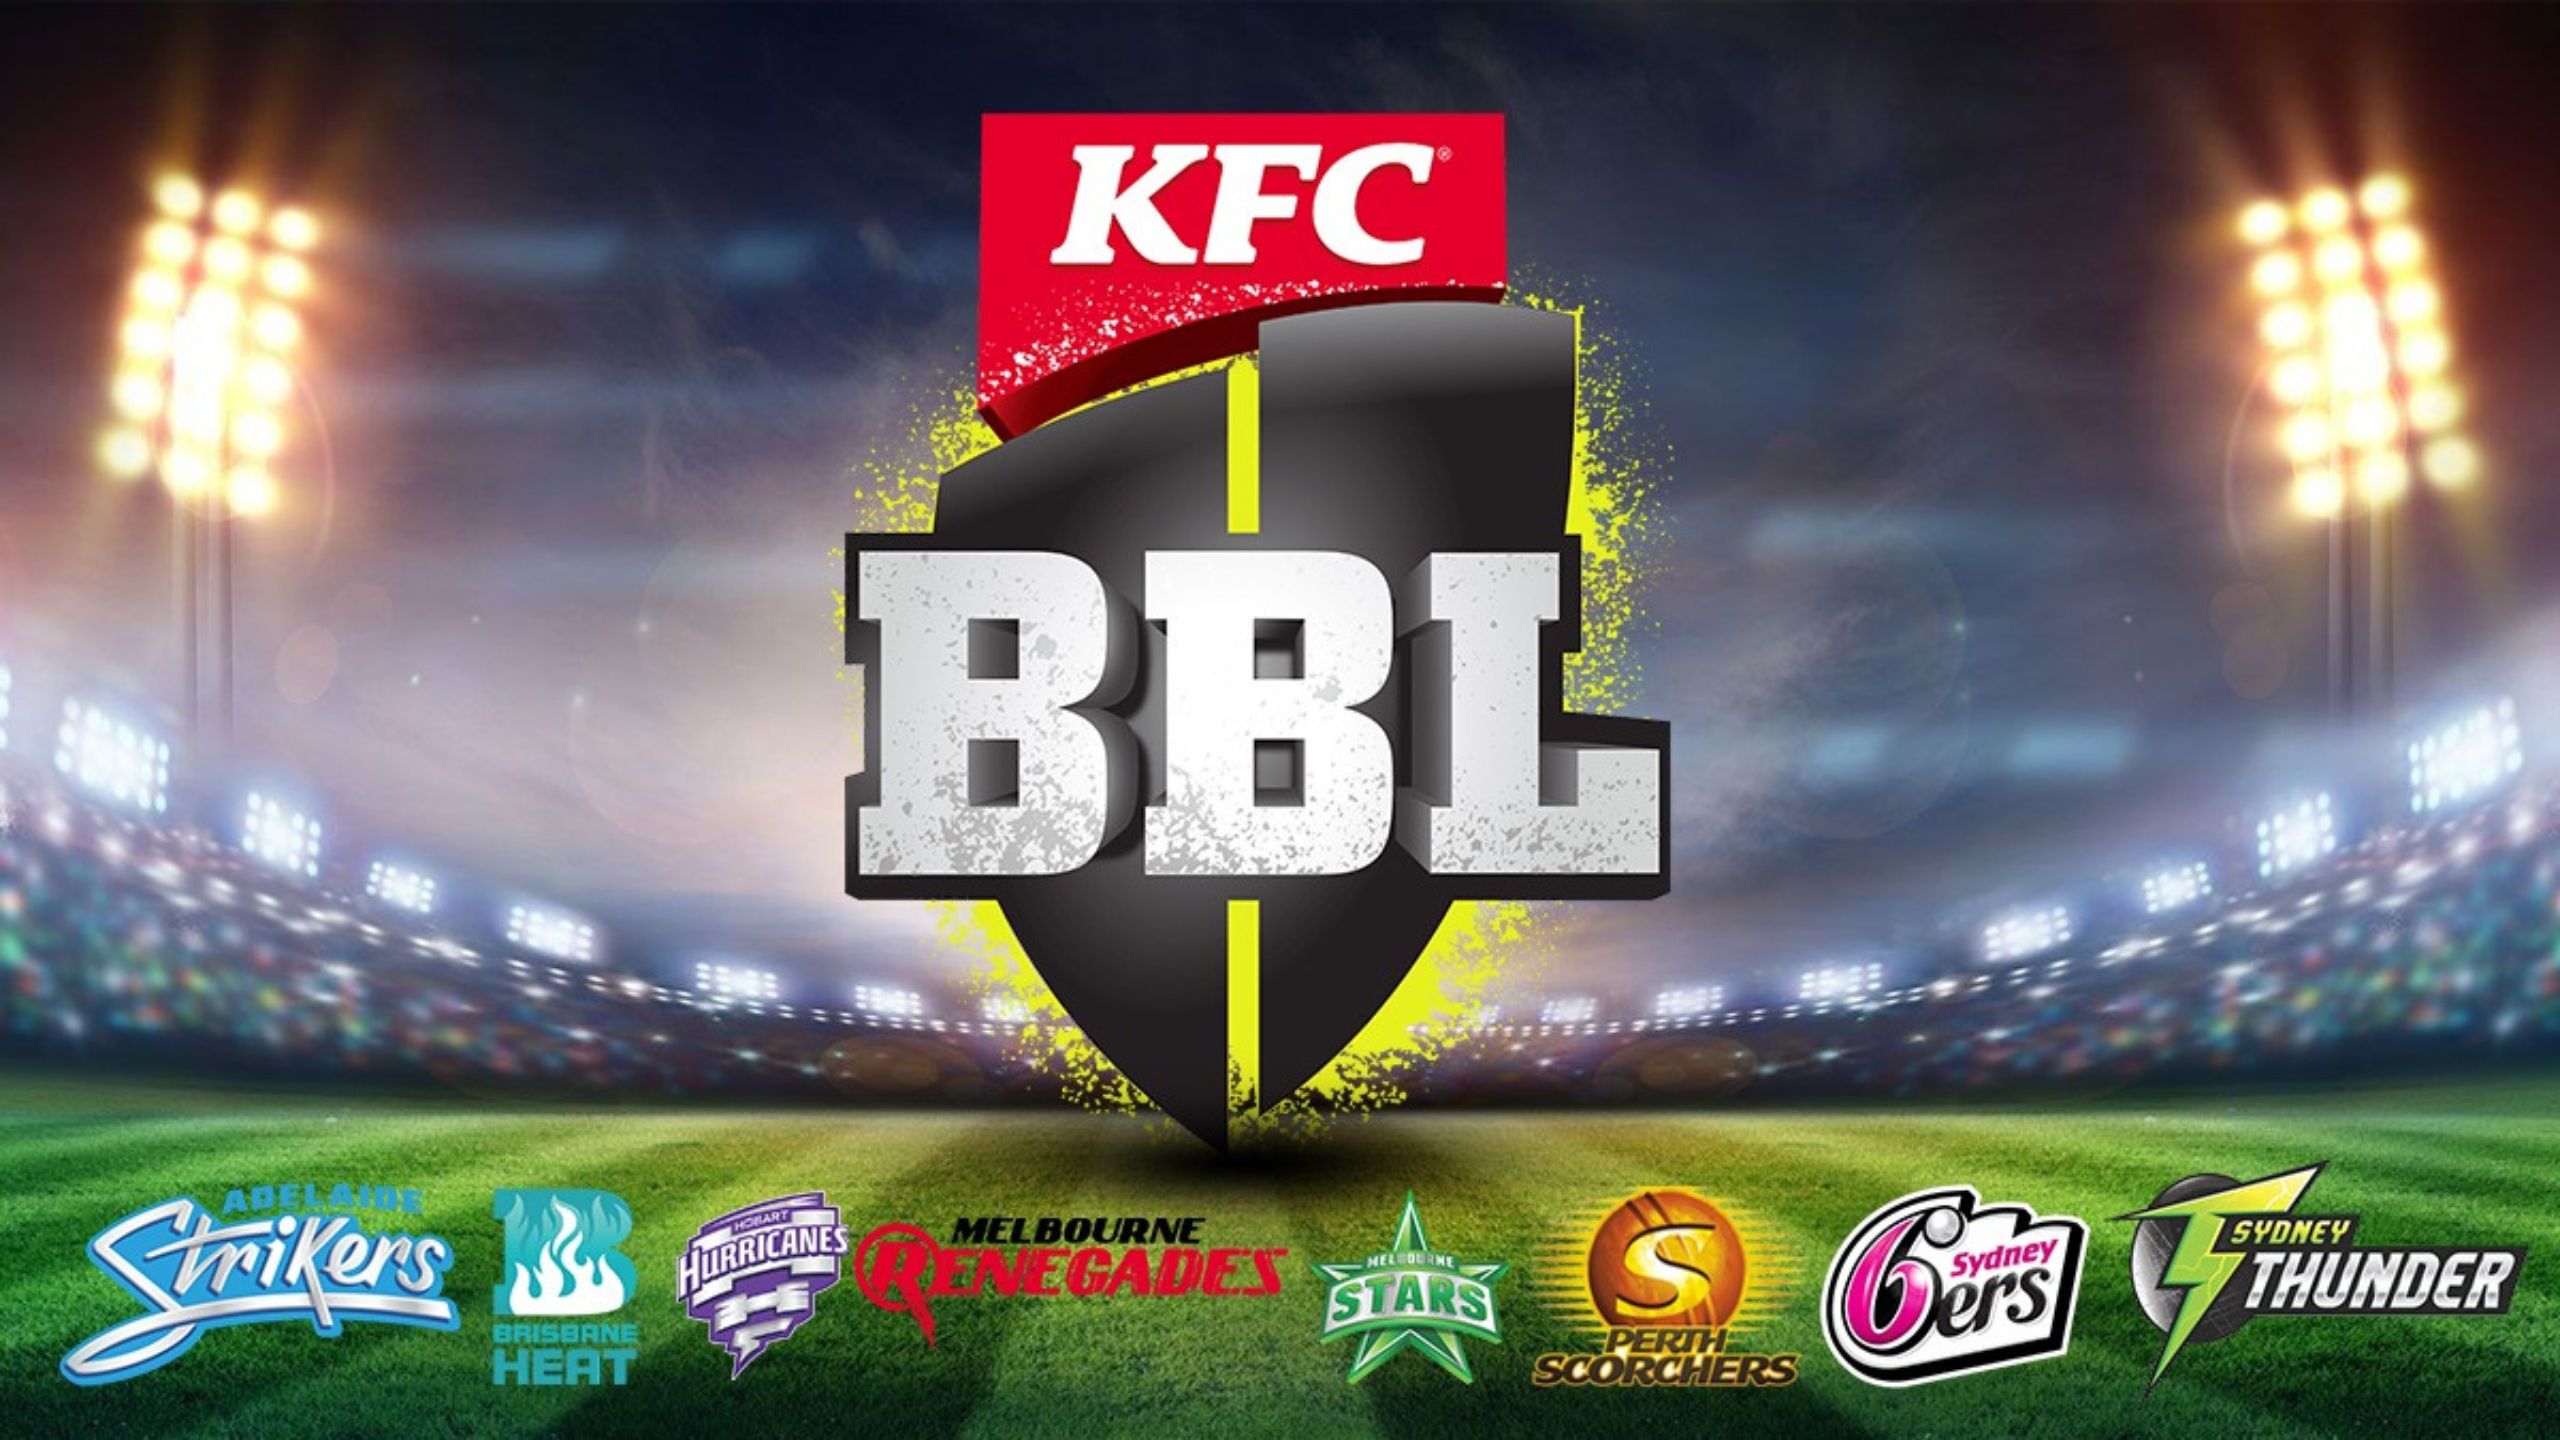 The Big Bash League is an Australian men's professional club Twenty20 cricket league